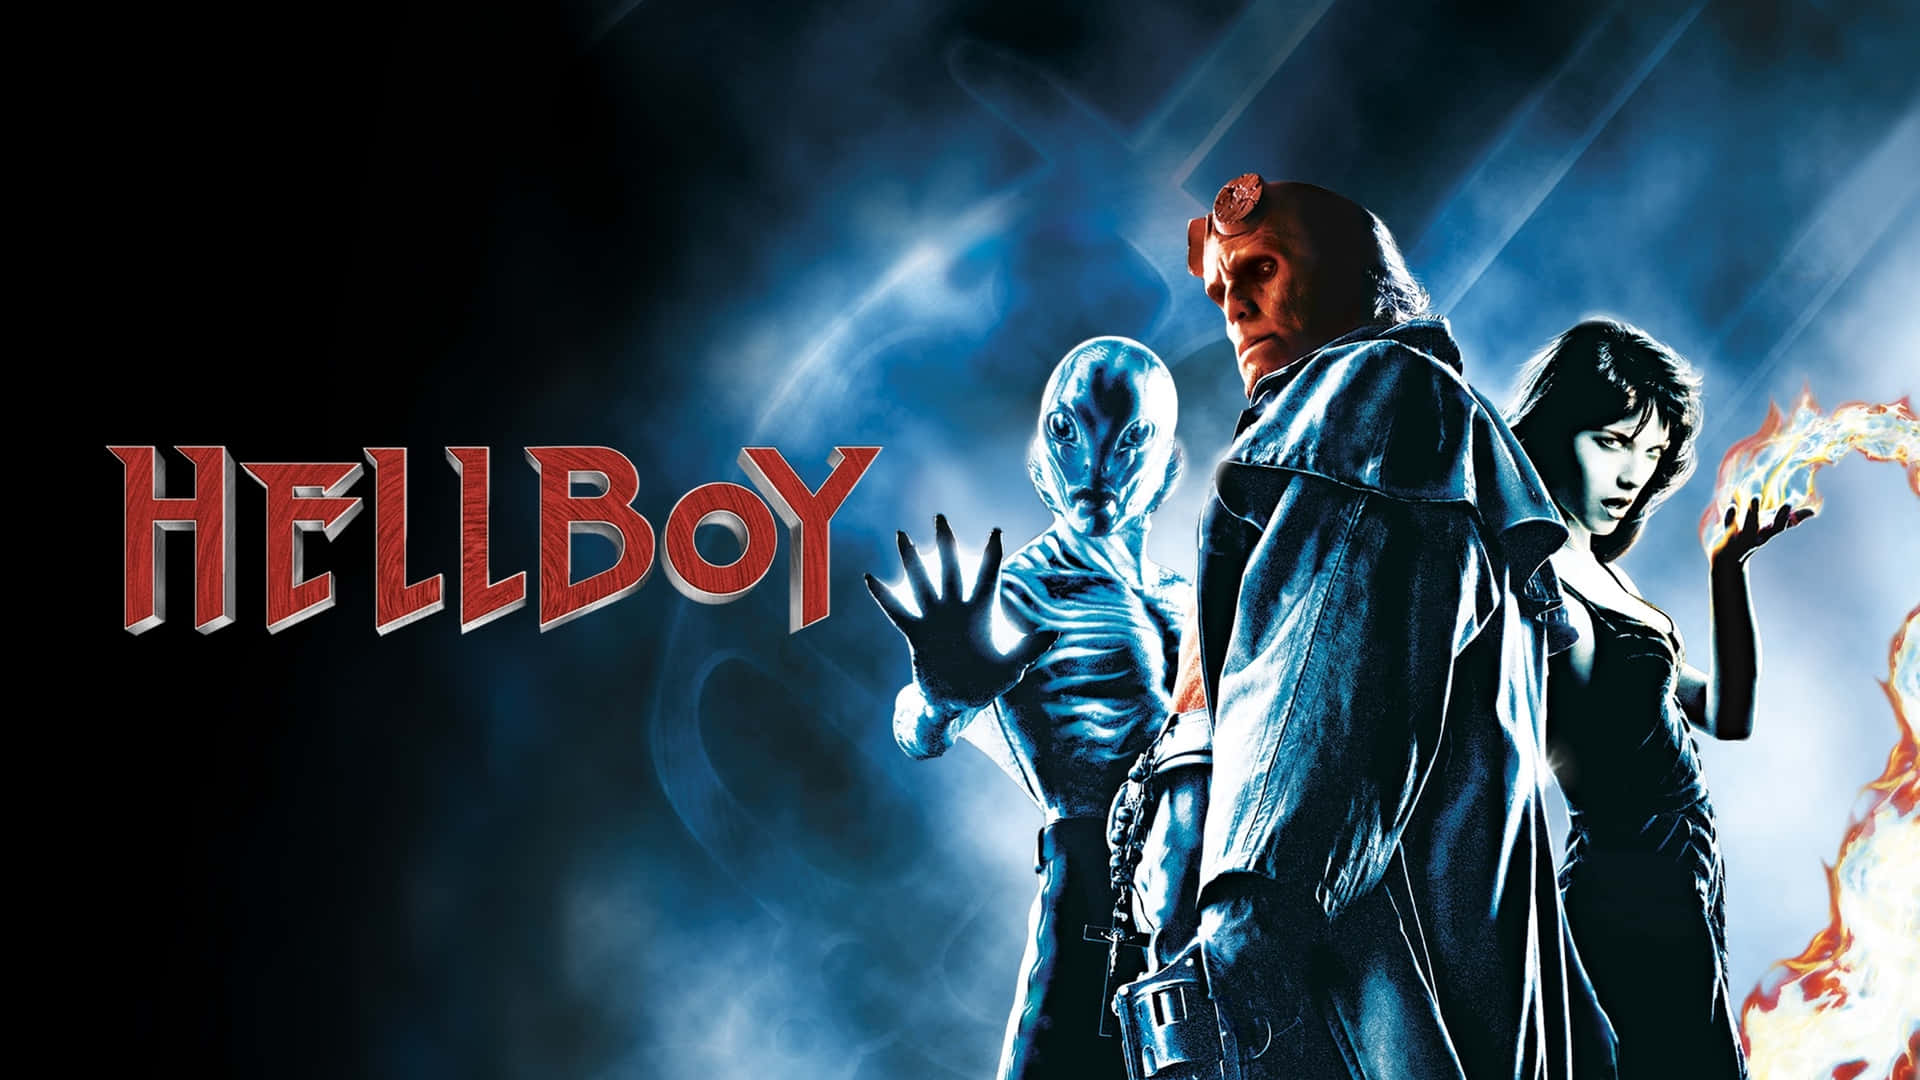 Hellboy Movie Poster Wallpaper